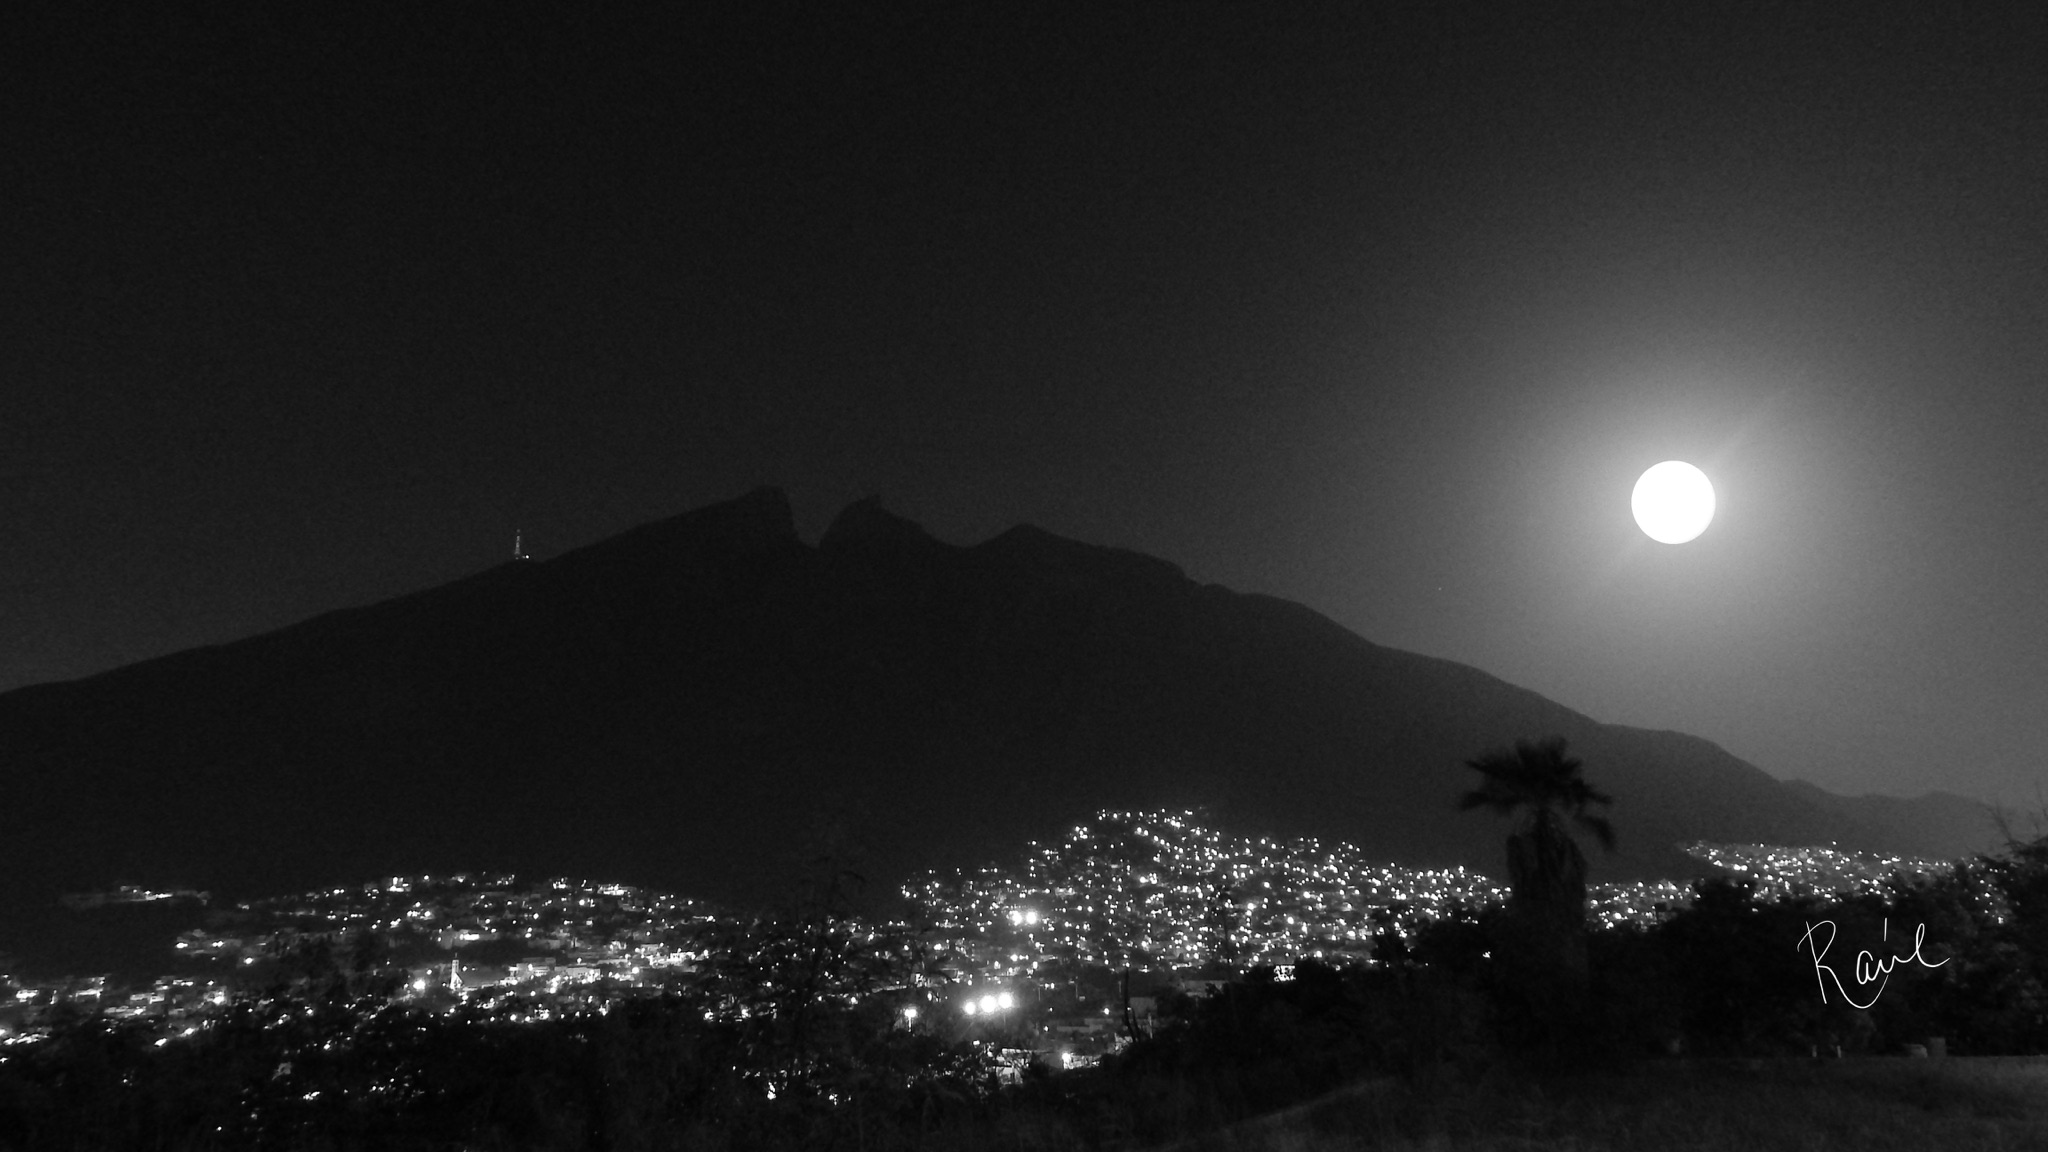 Community photo by Raul Cortes | Monterrey, Mexico.